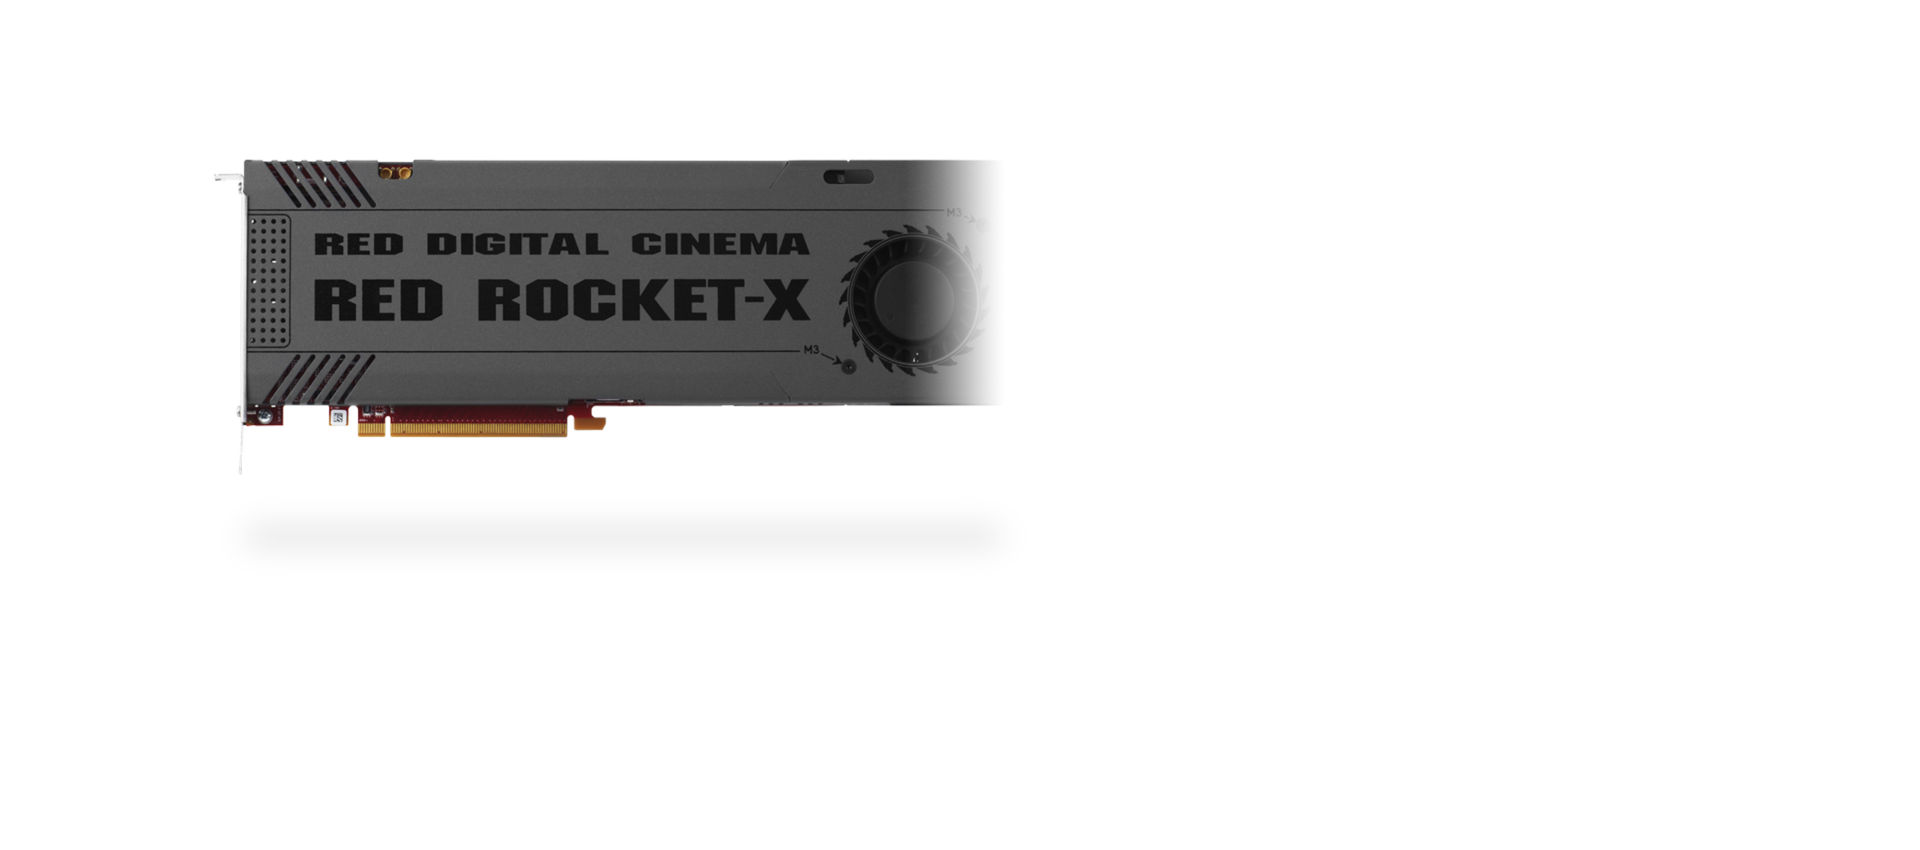 Red Rocket-X_ Avid Pro Tools HDX